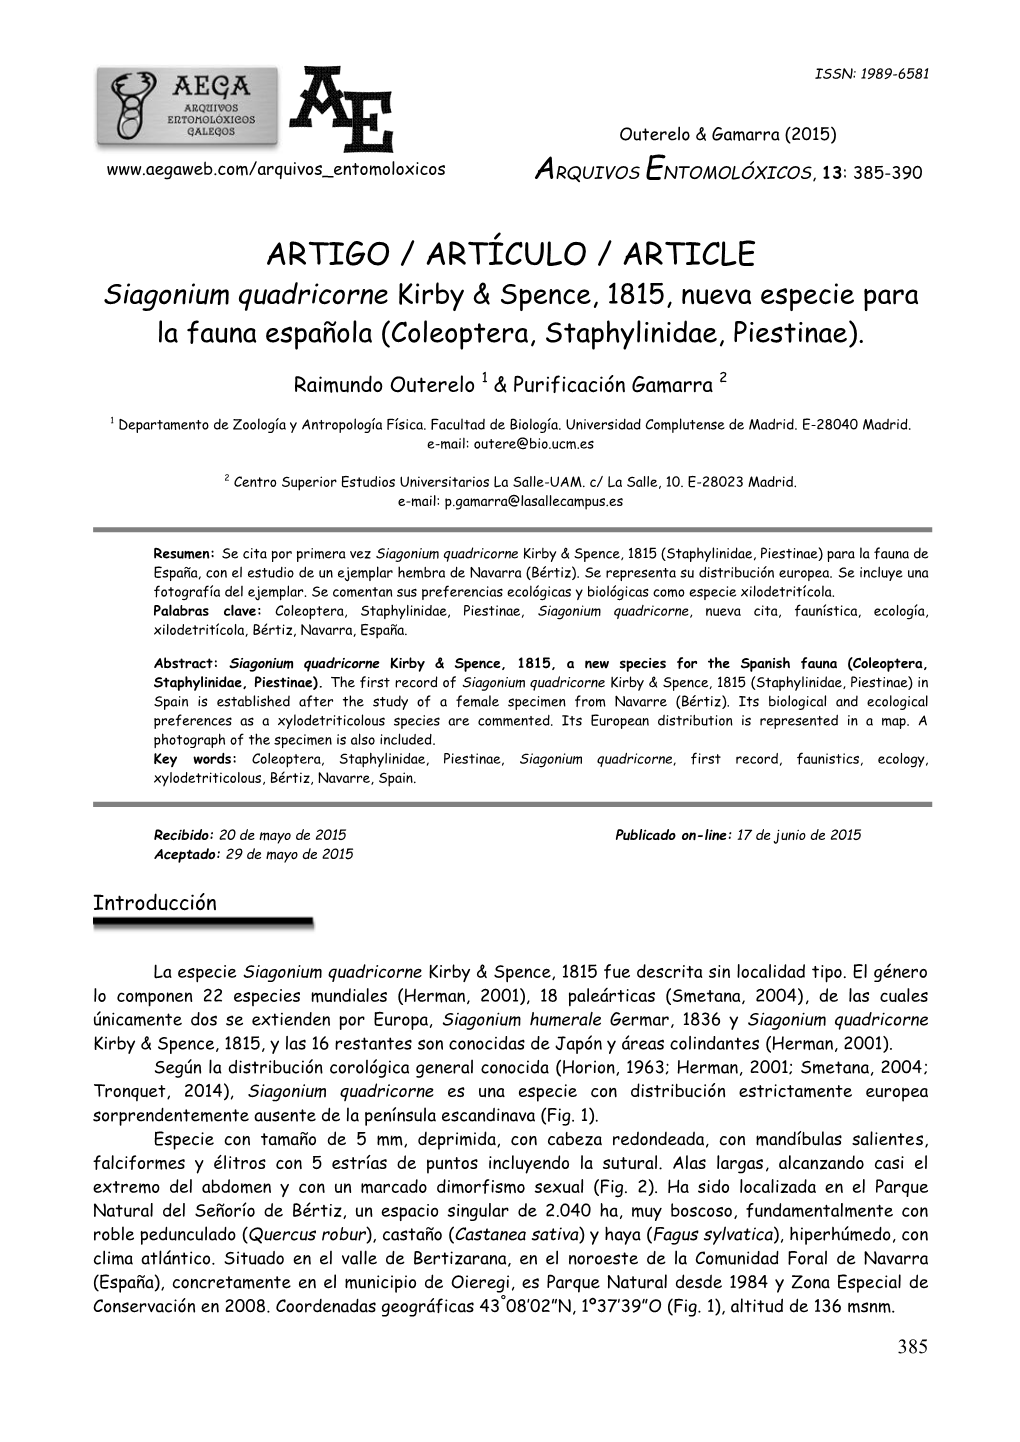 ARTIGO / ARTÍCULO / ARTICLE Siagonium Quadricorne Kirby & Spence, 1815, Nueva Especie Para La Fauna Española (Coleoptera, Staphylinidae, Piestinae)